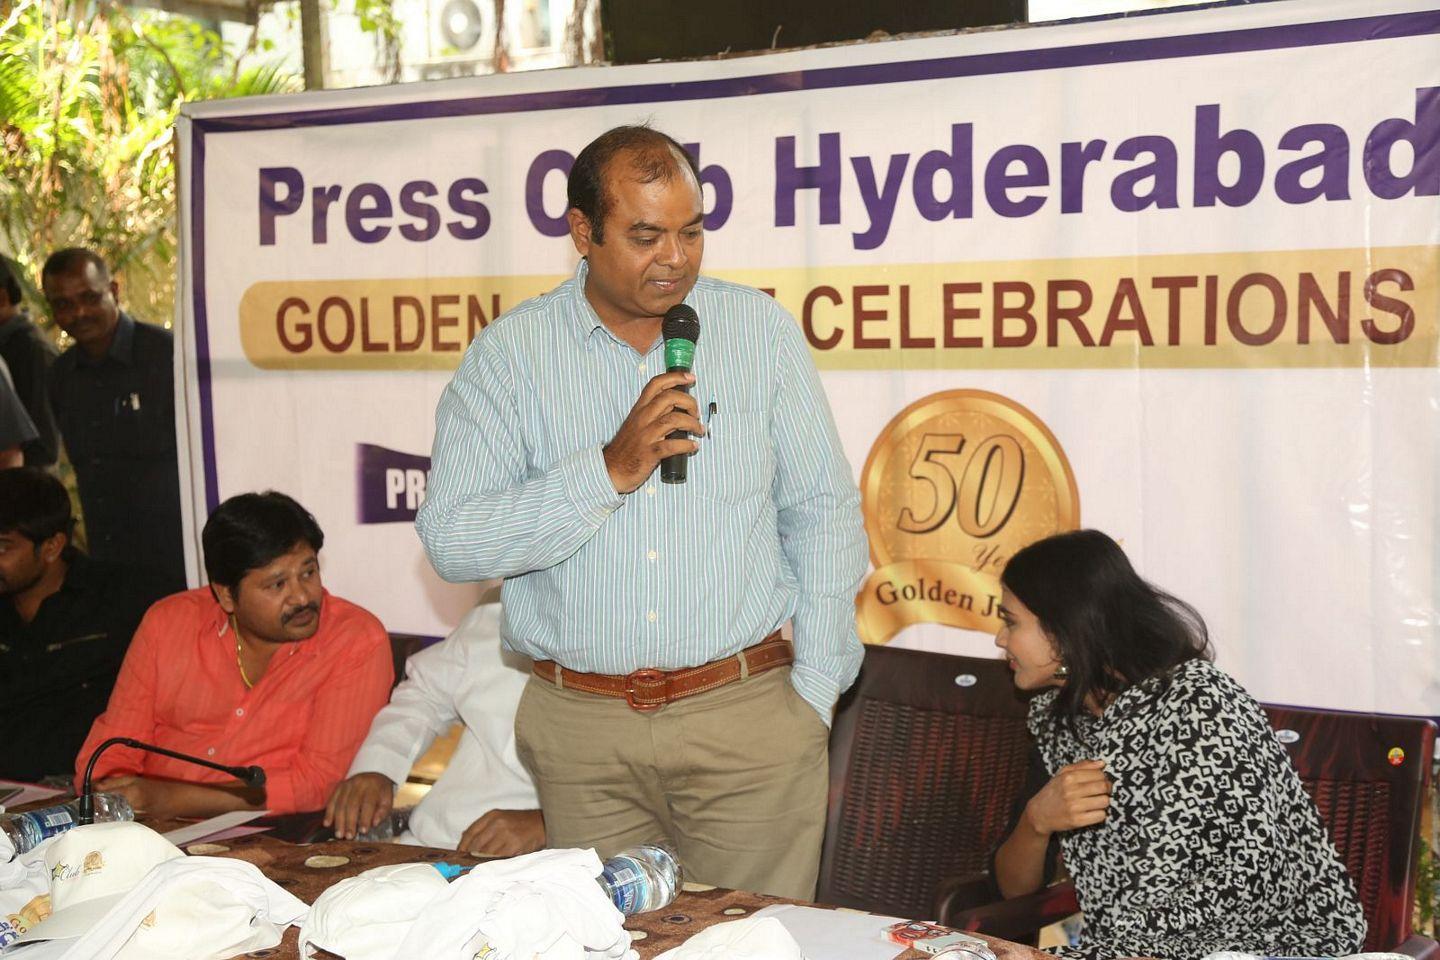 Press Club Golden Jubliee Celebrations